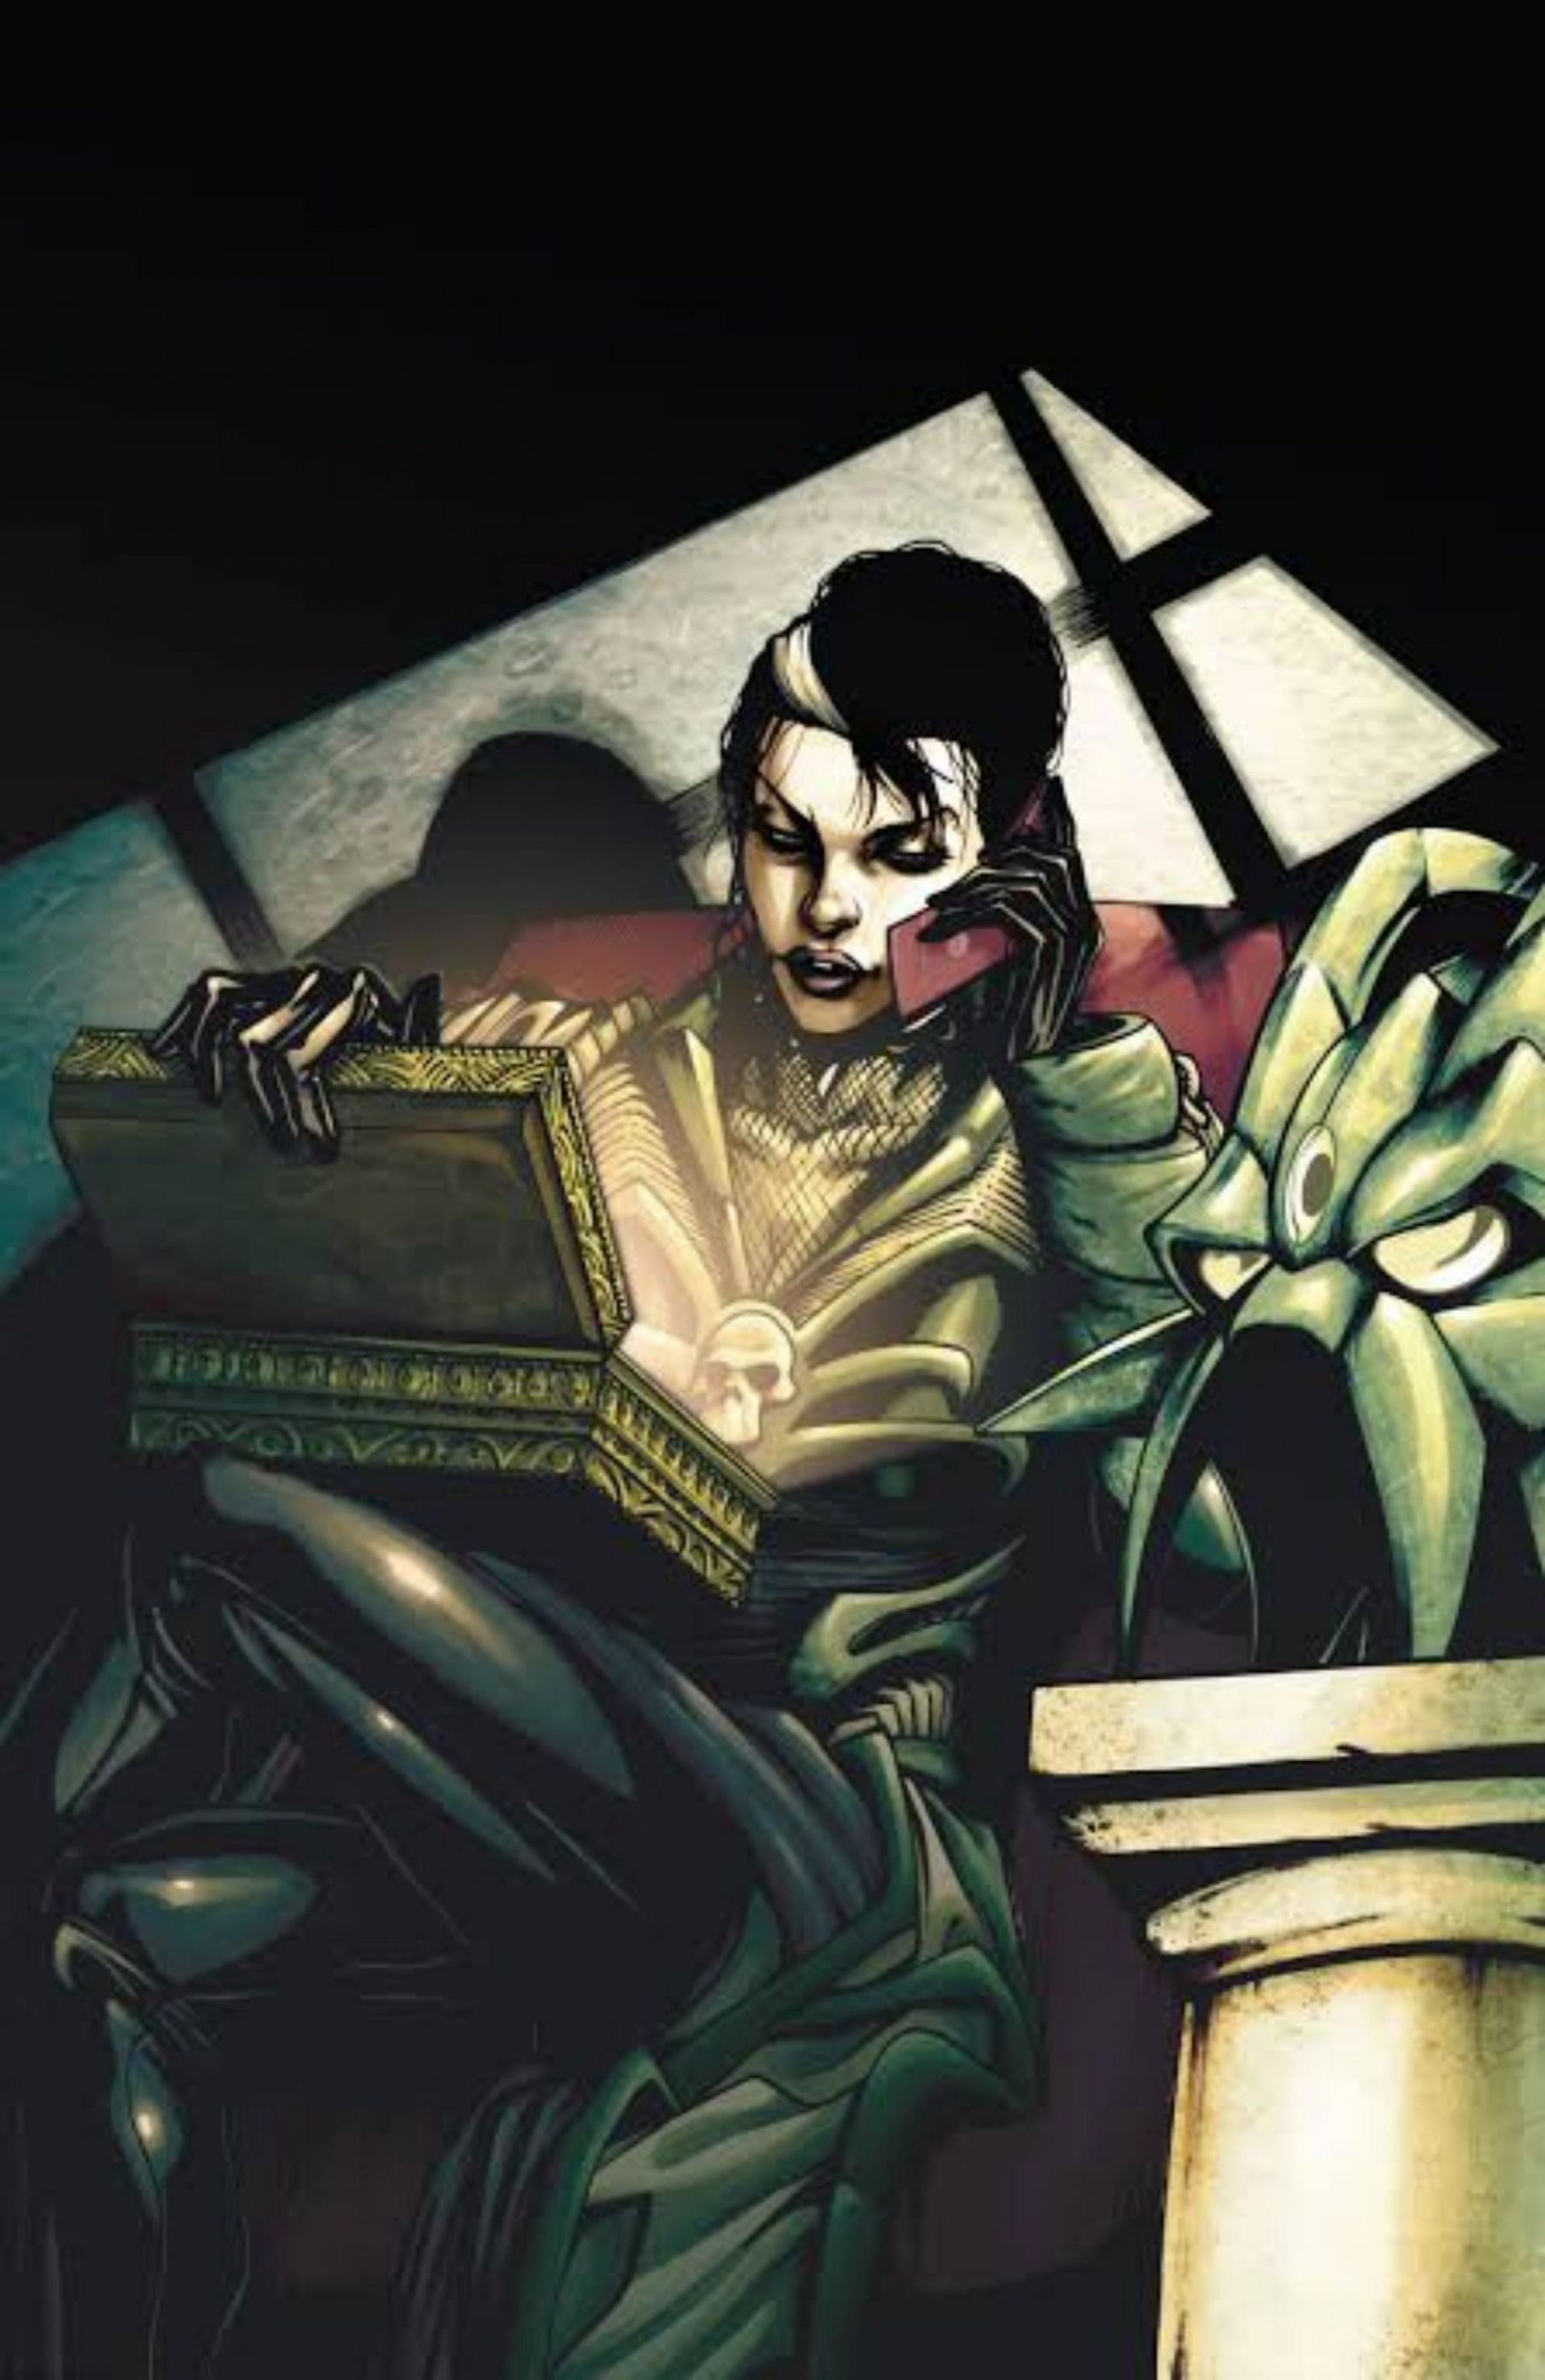 Valentina Allegra de Fontaine hatching an evil plan as Madame Hydra (Image via Marvel Comics)